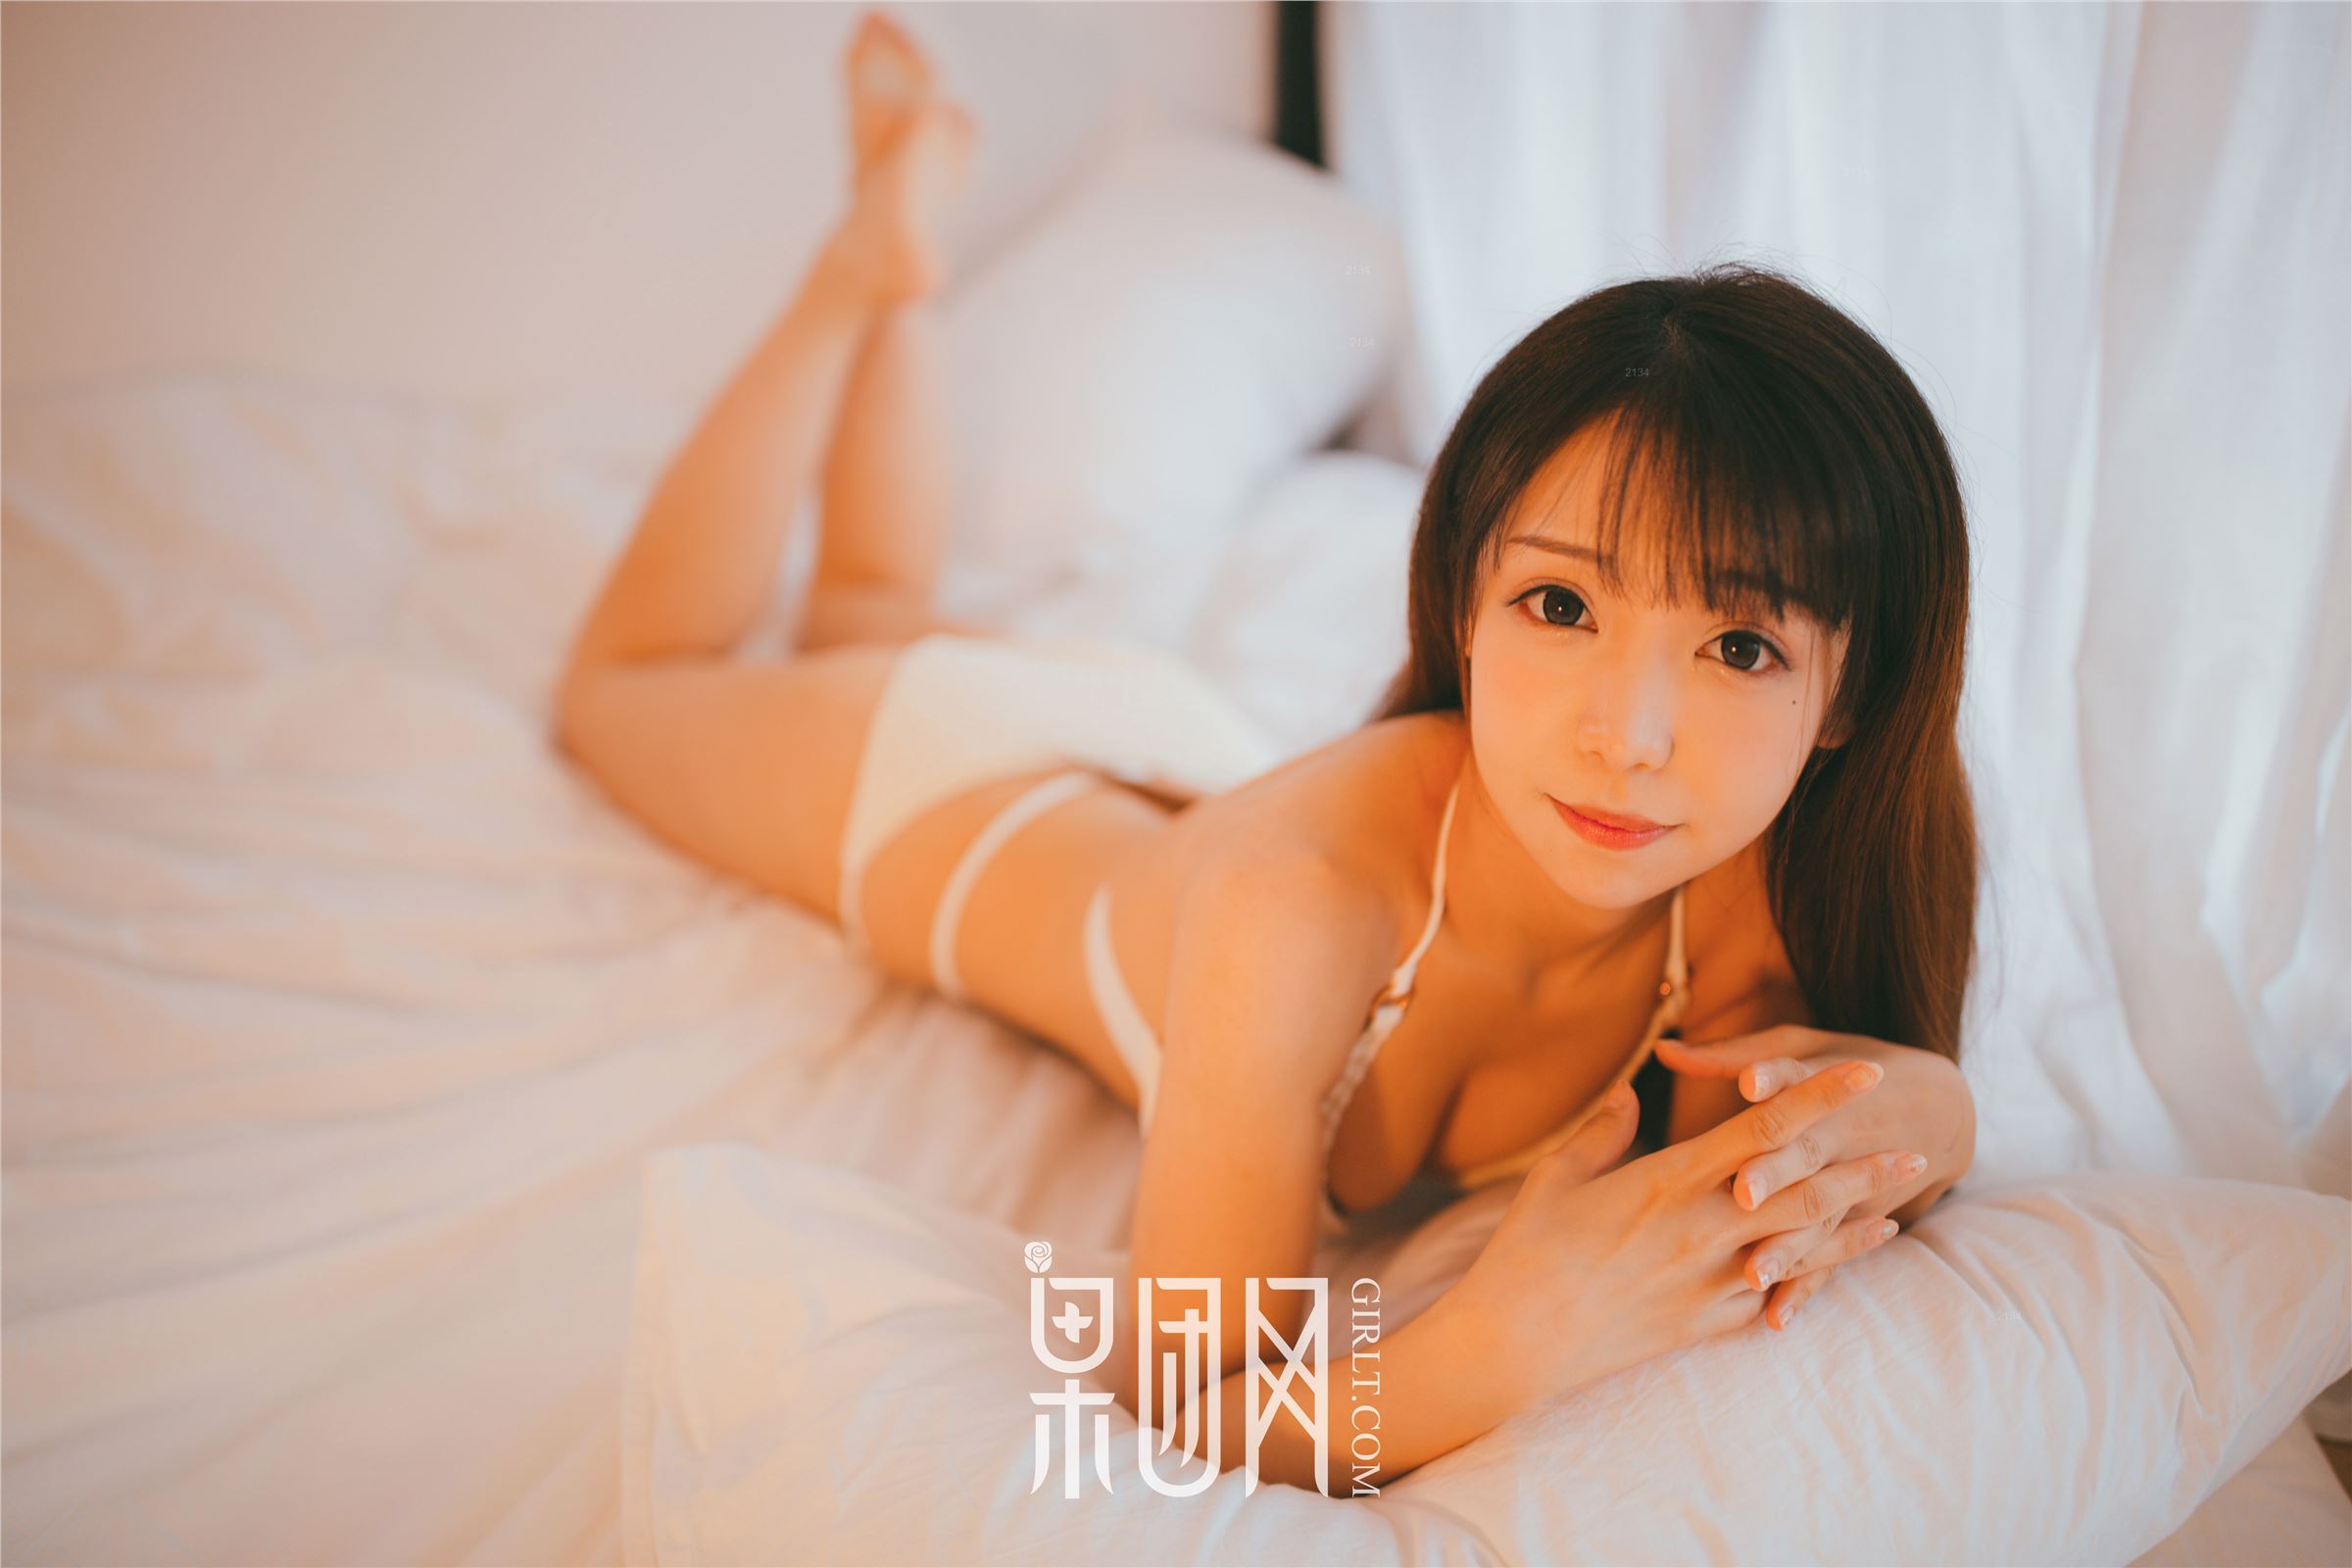 [Girlt guotuan.com] March 09, 2018 Jixin kumagawa no.025